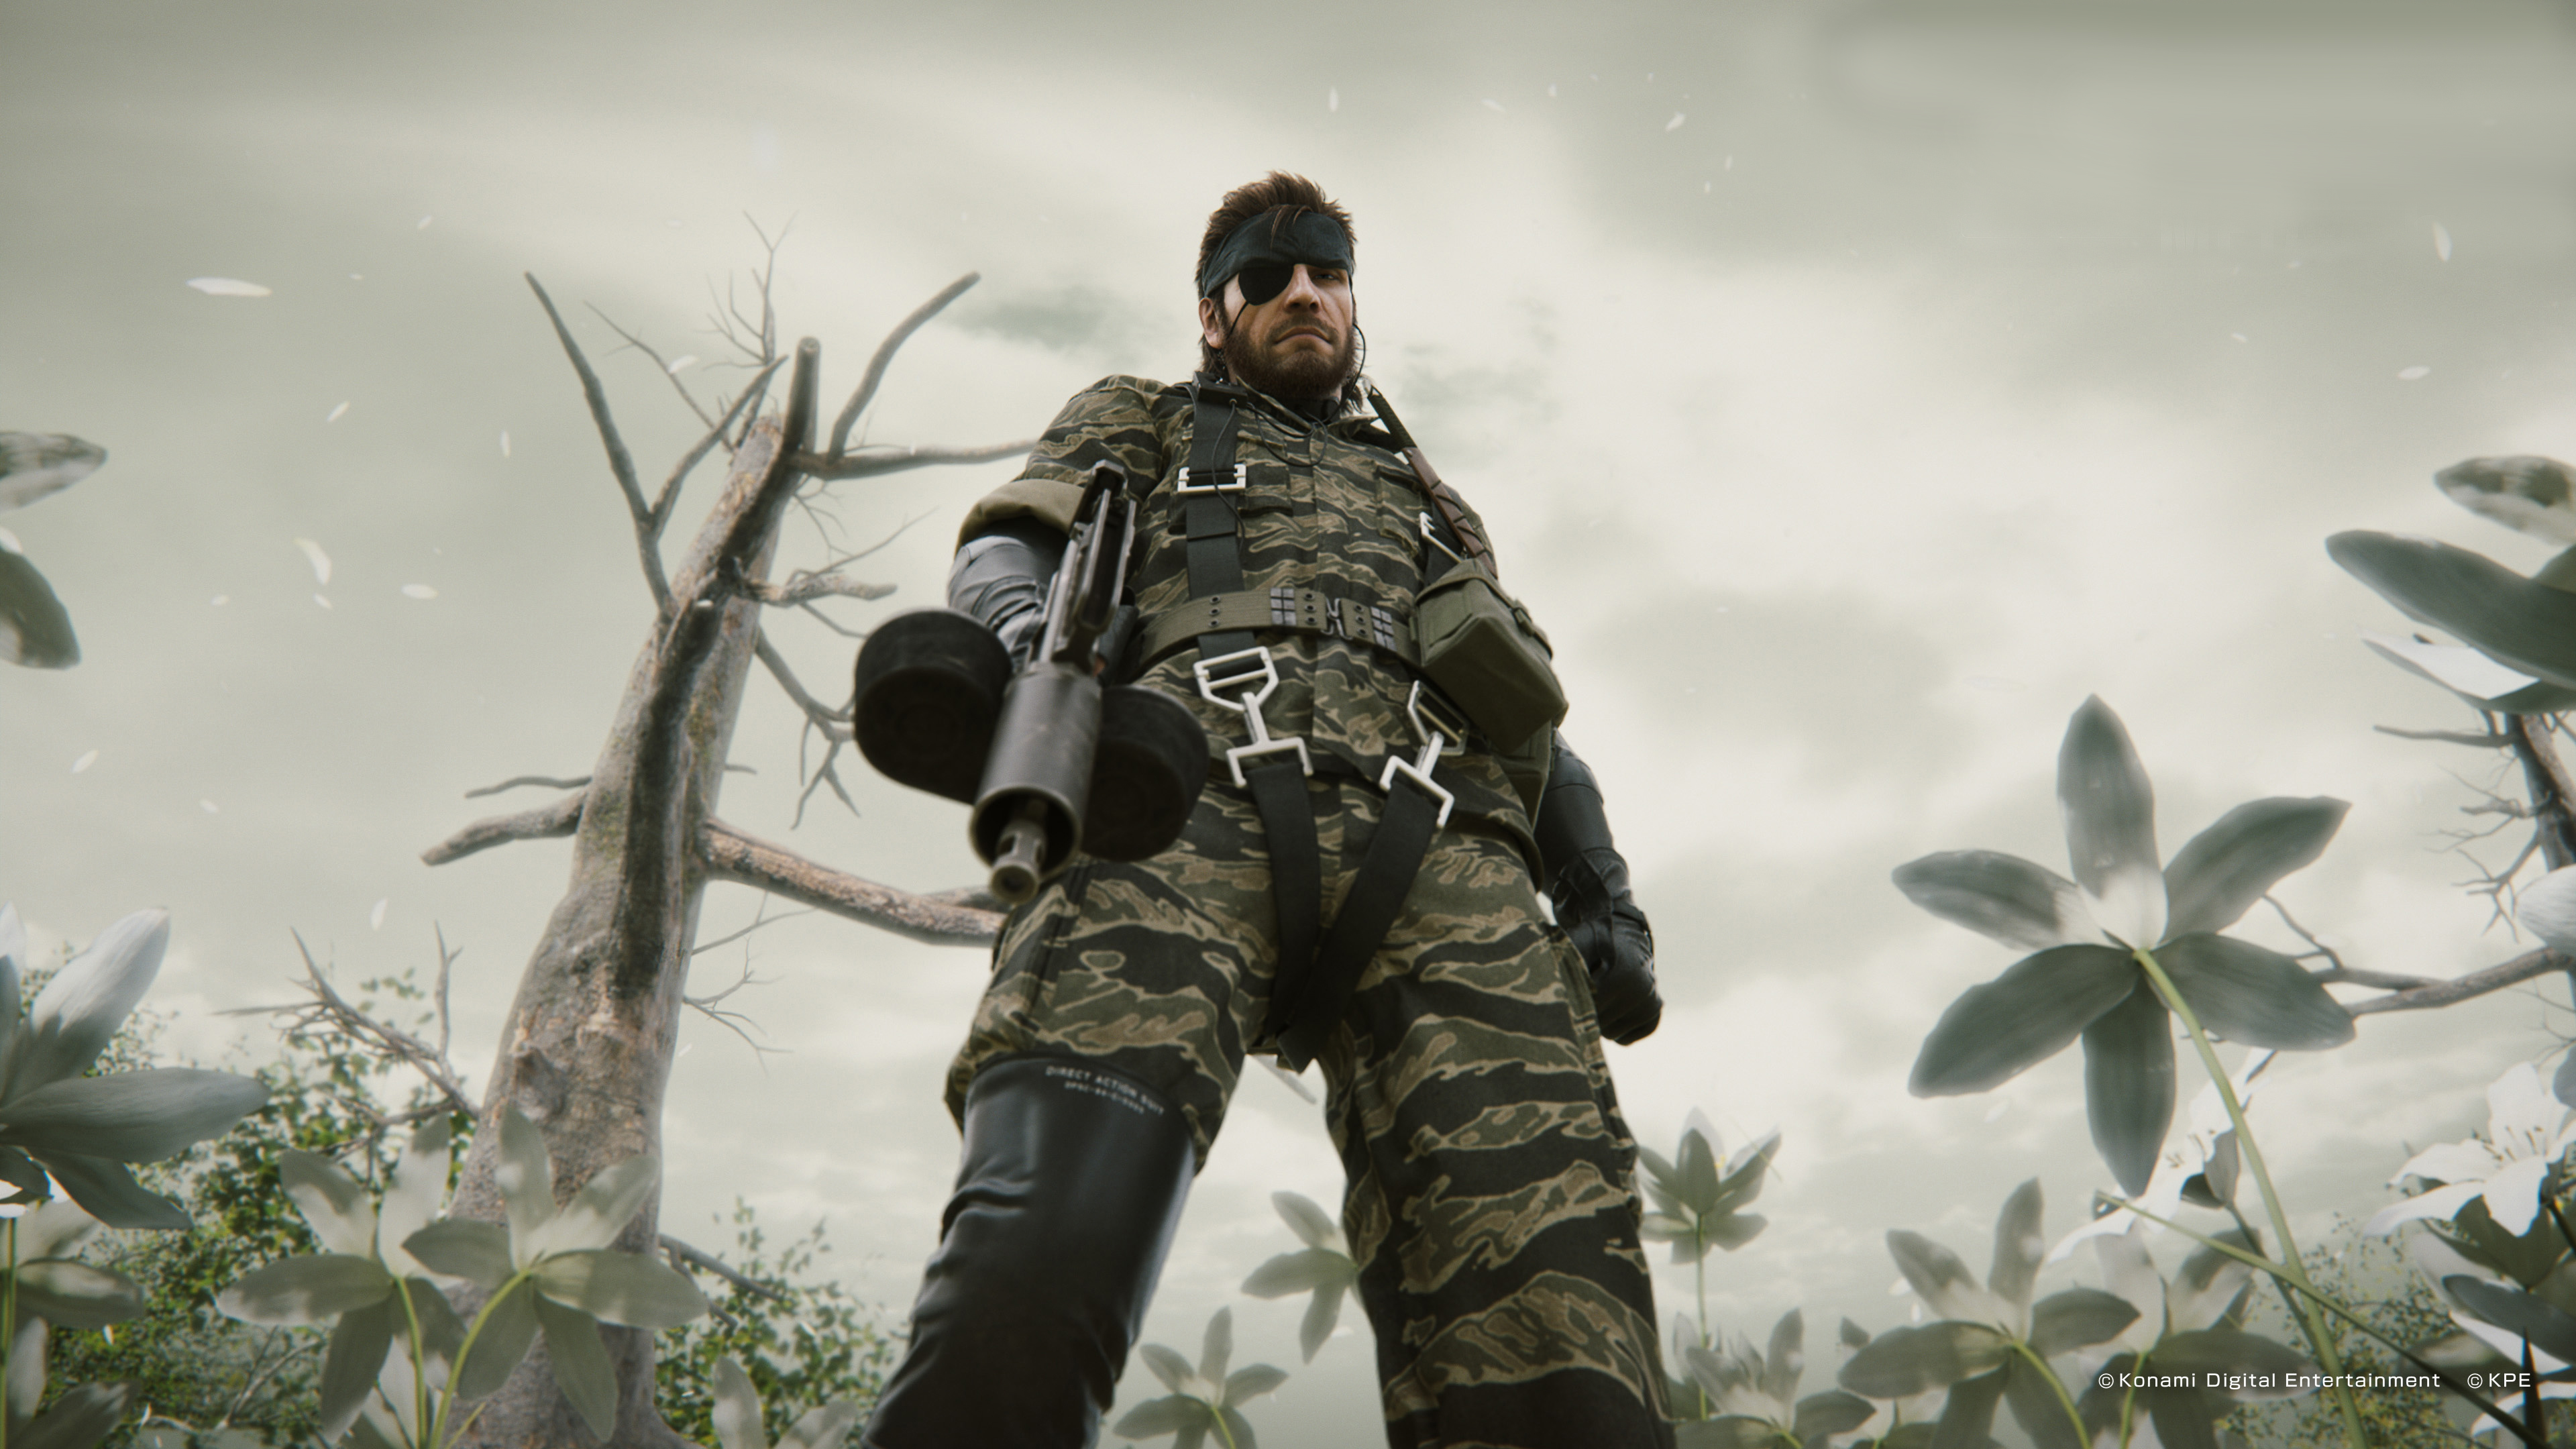 Metal Gear Solid 3 Snake Eater Big Boss Digital Art Video Games Watermarked Video Game Characters CG 3840x2160